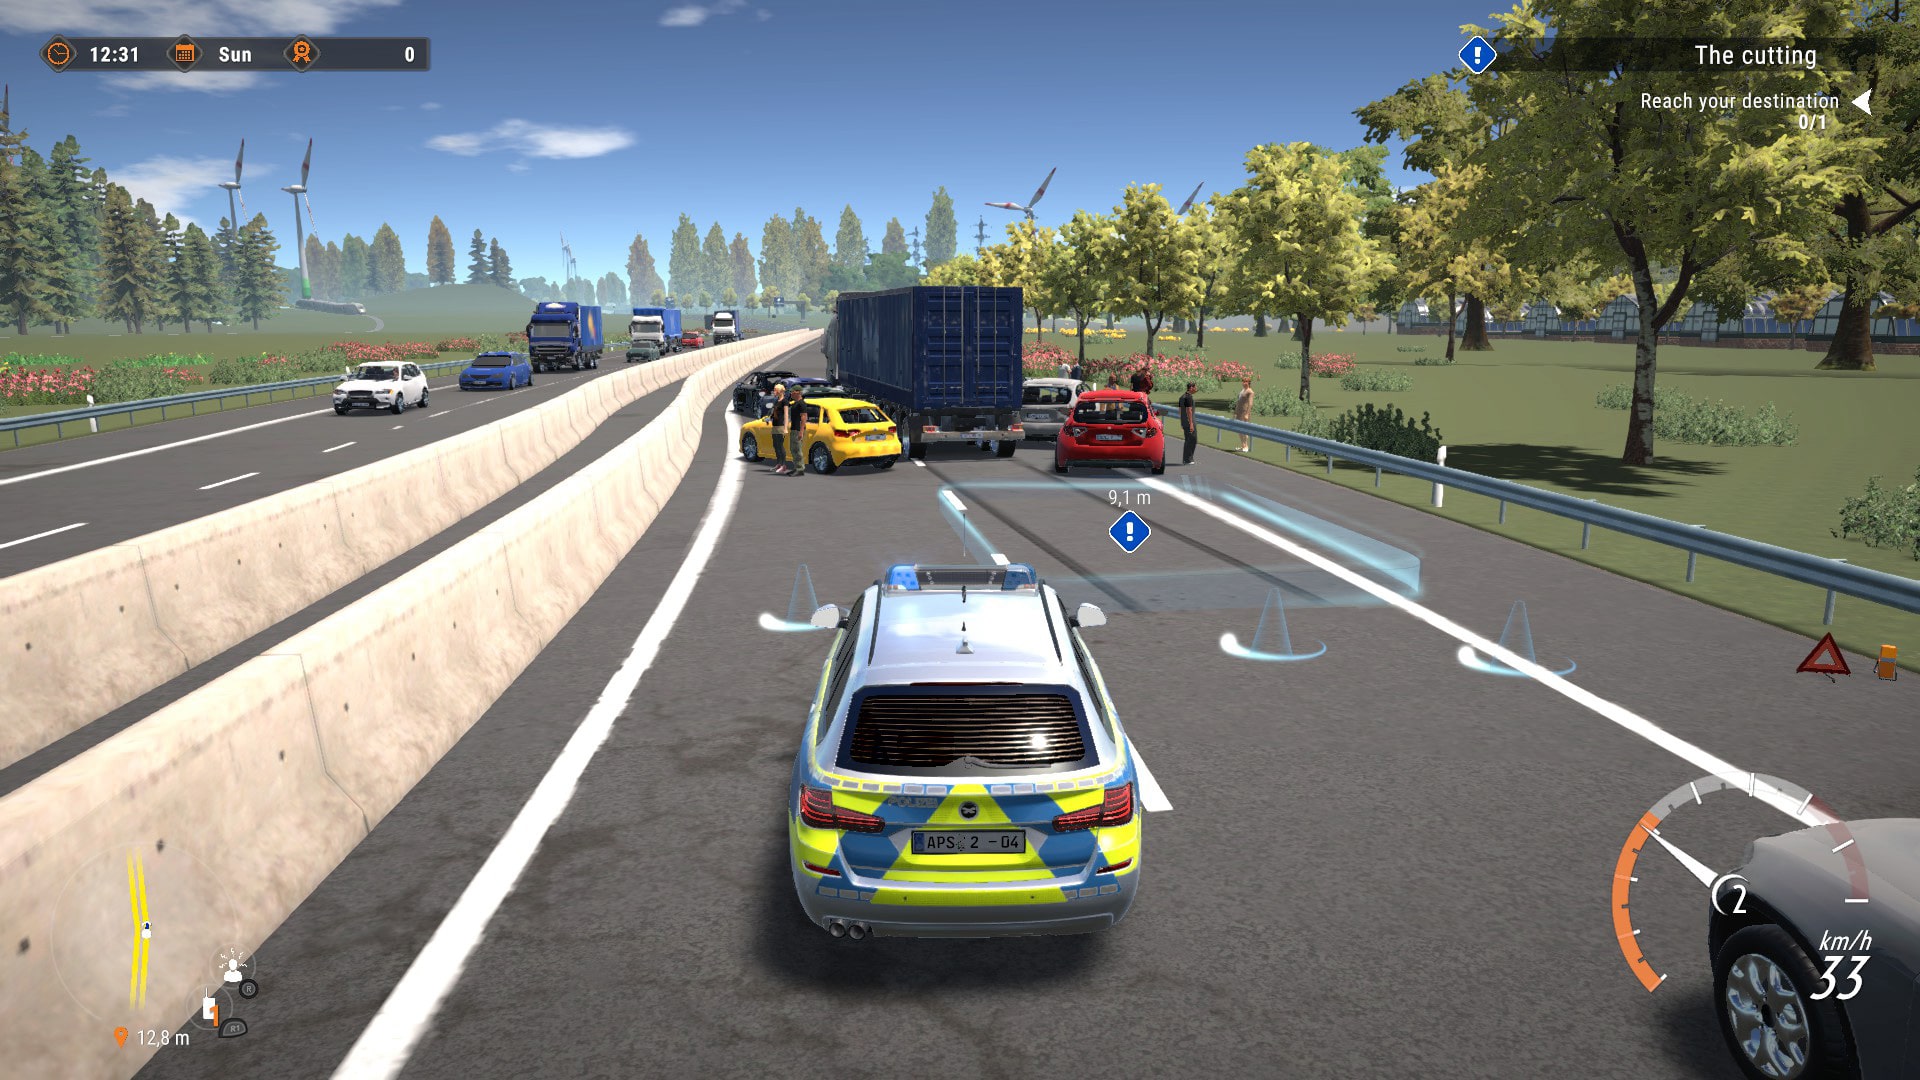 afspejle grøntsager Match Autobahn Police Simulator 2